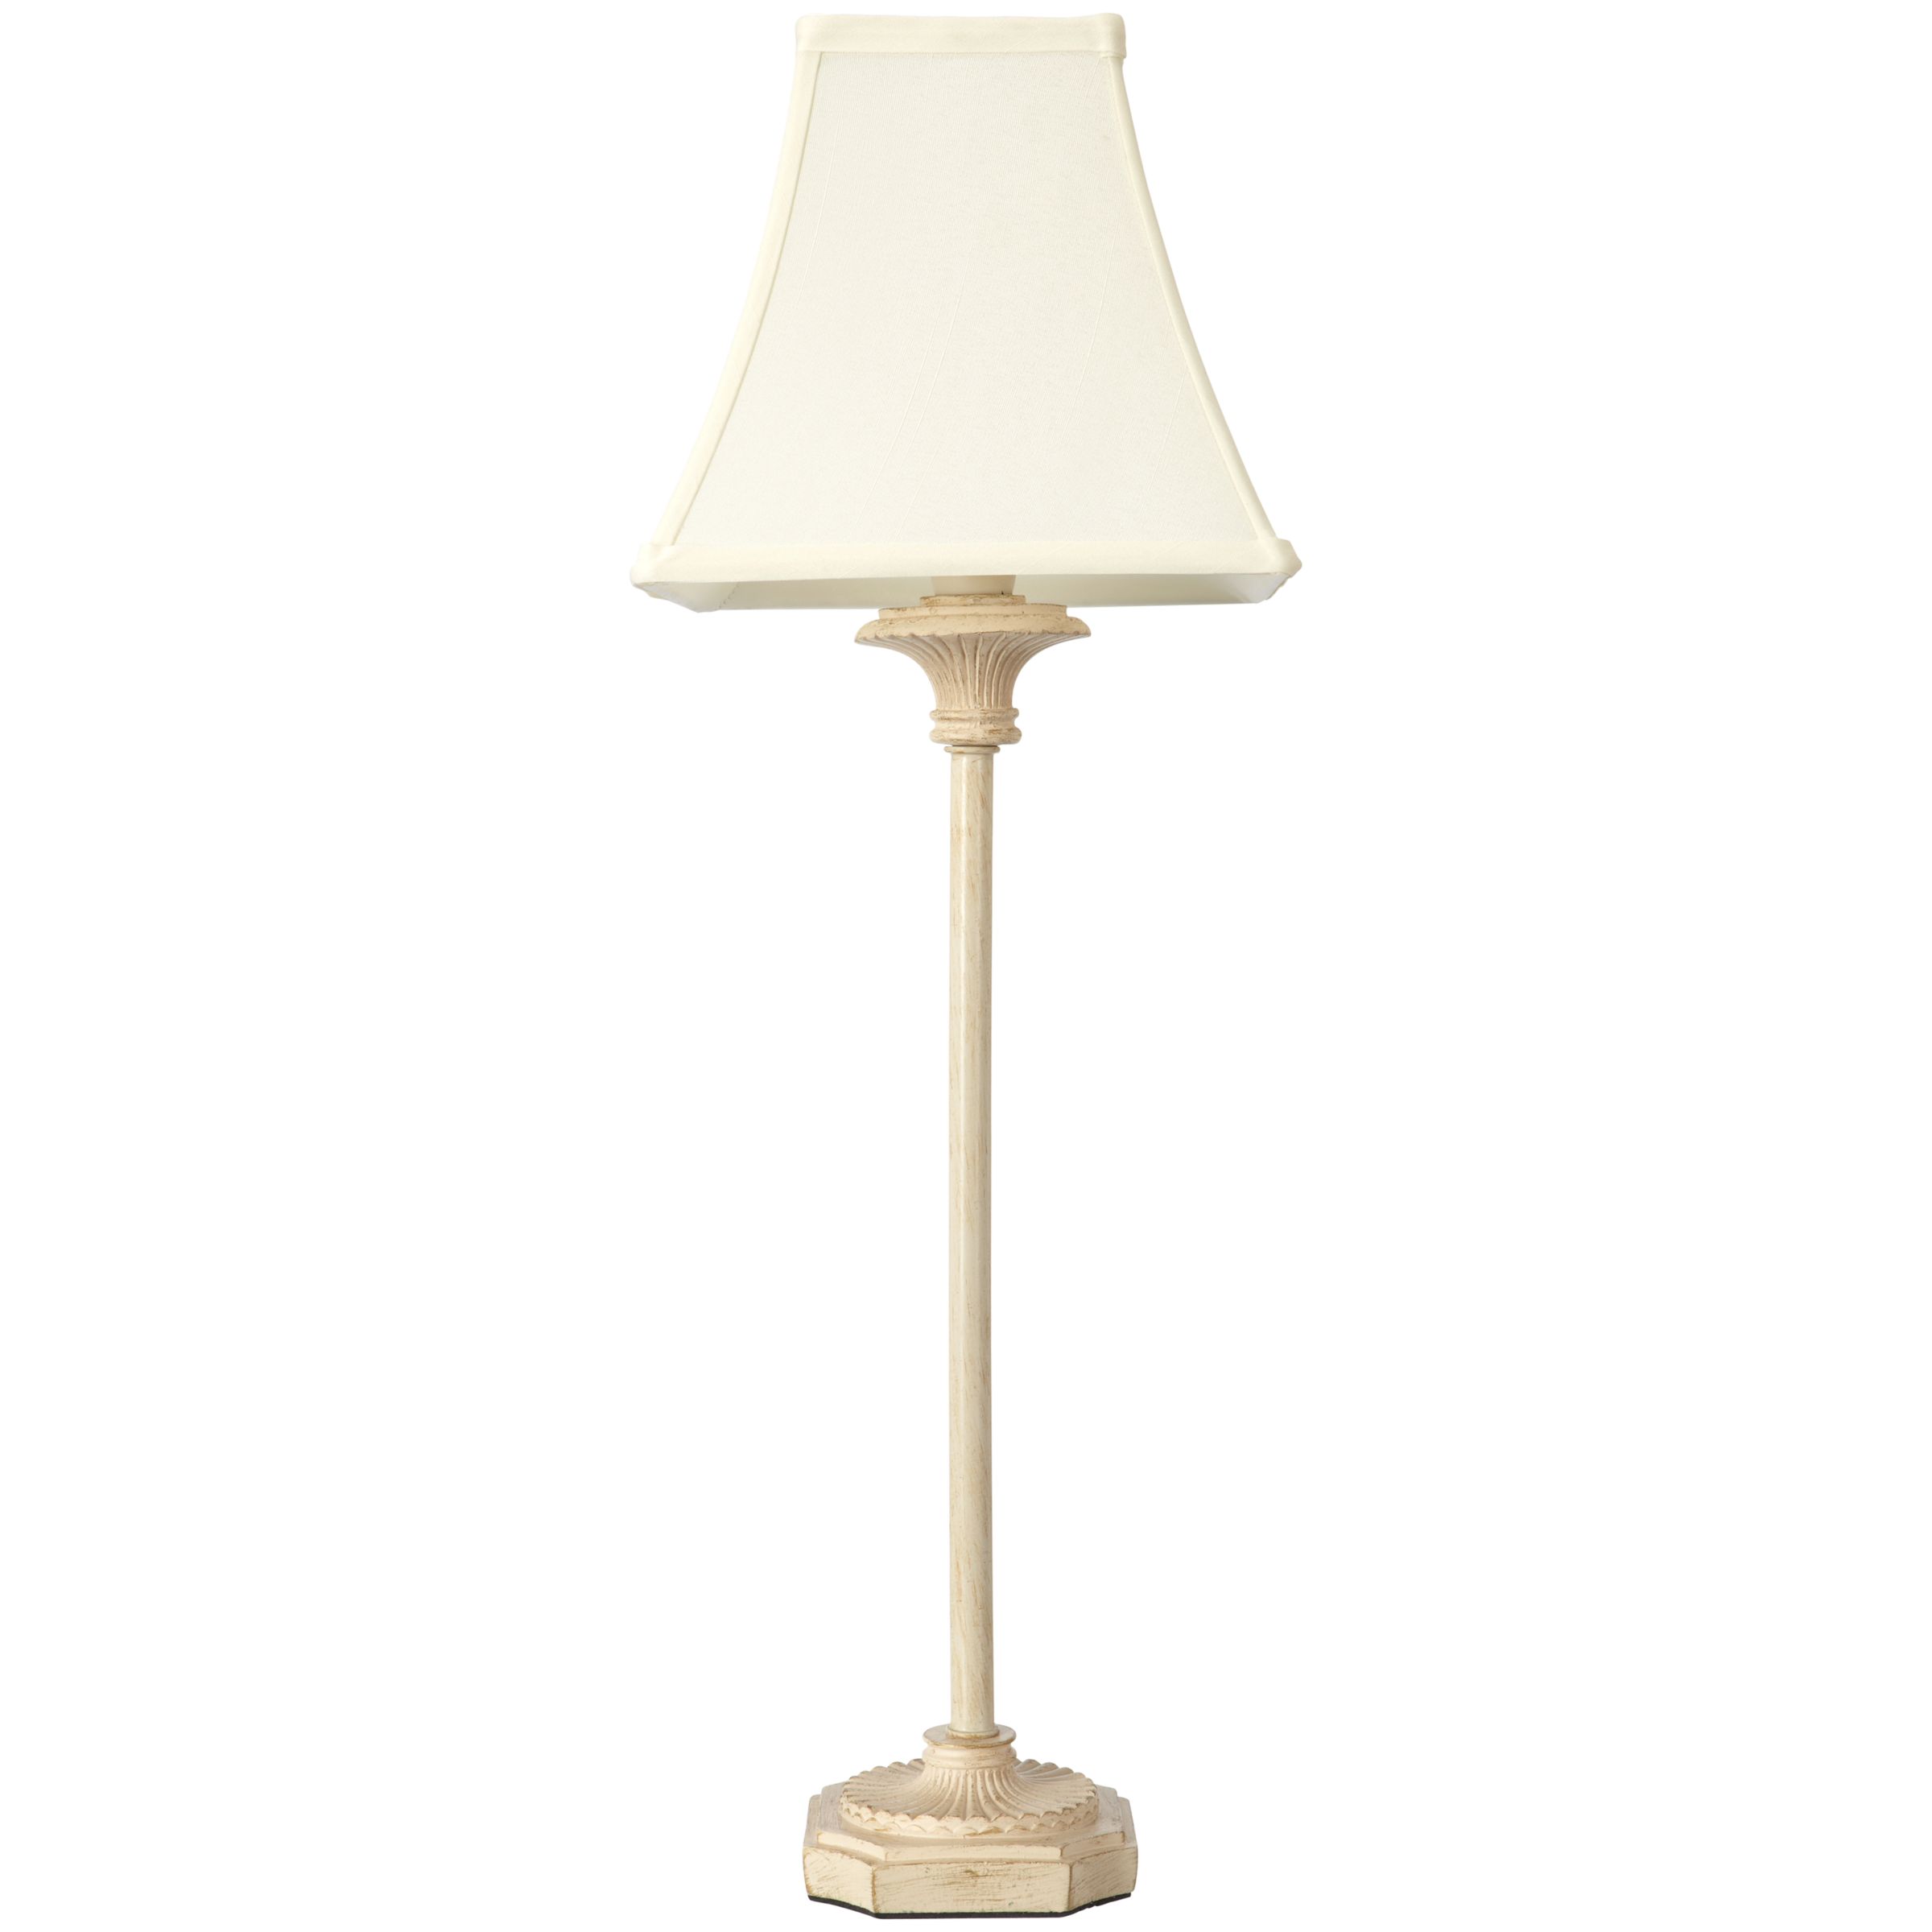 John Lewis Eve Table Lamp